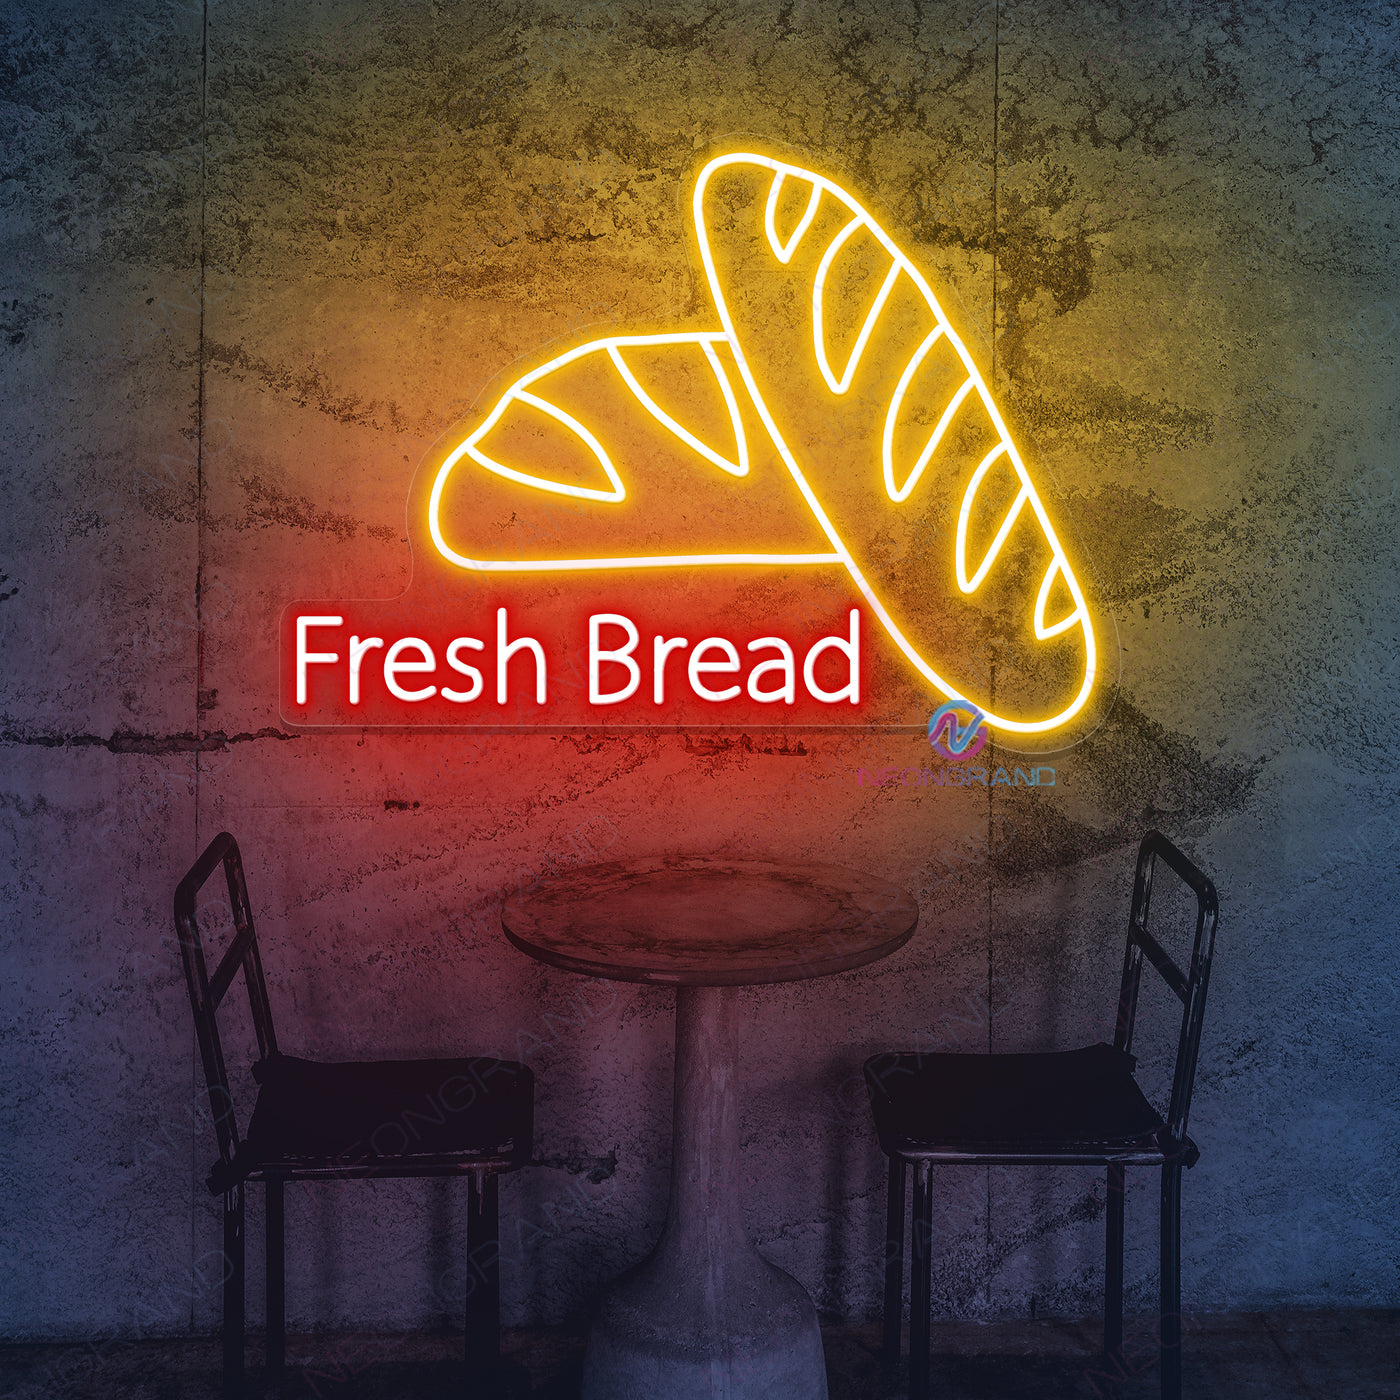 Fresh Bread Neon Sign Kitchen Led Light Red